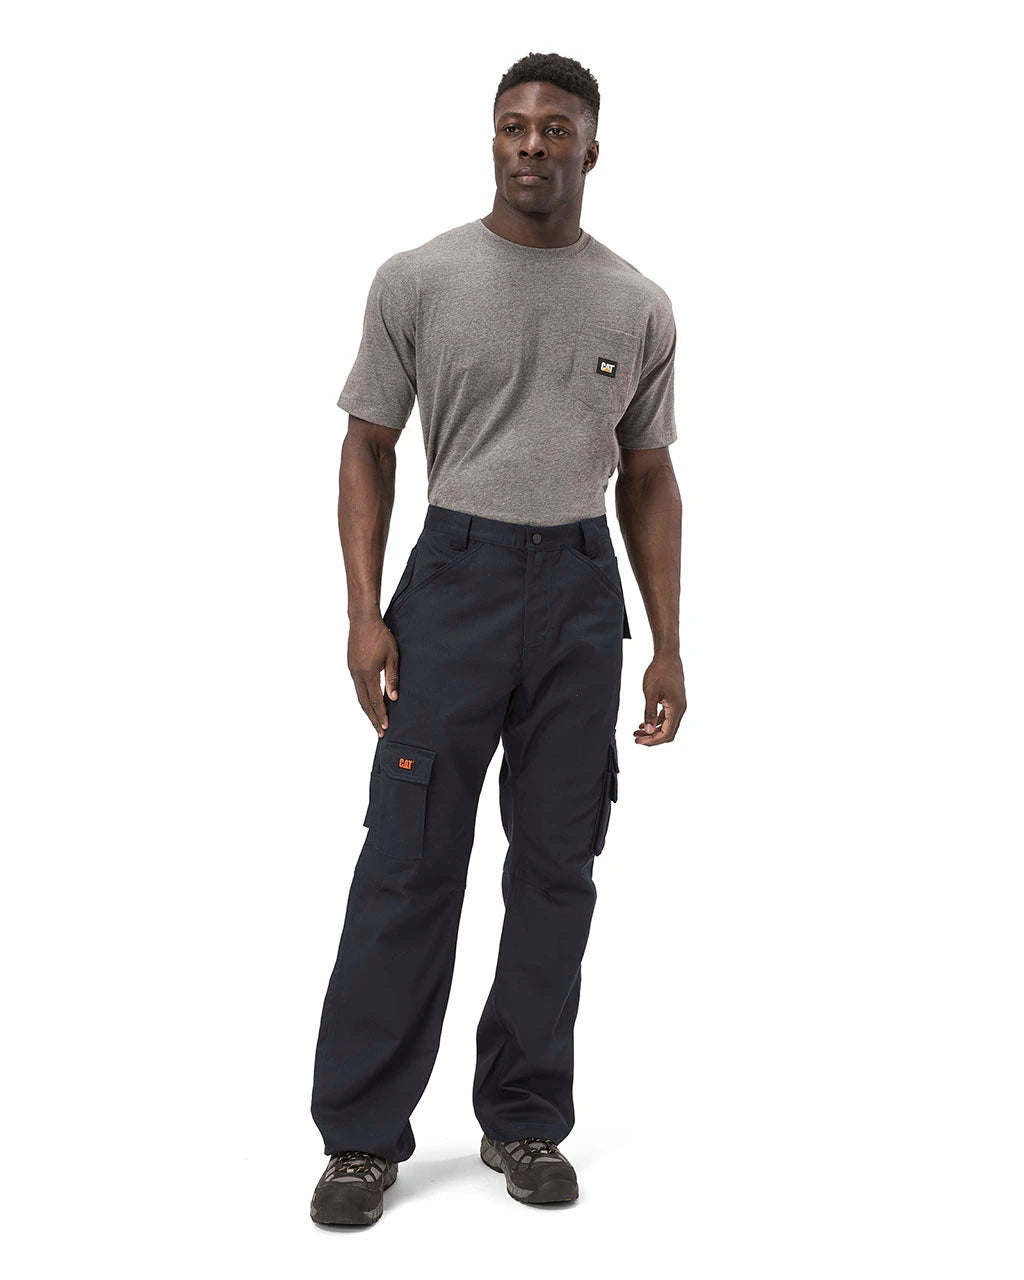 Bootcut Cargo Pants - Camo | Cargo pants outfit men, Camo pants outfit men,  Army cargo pants